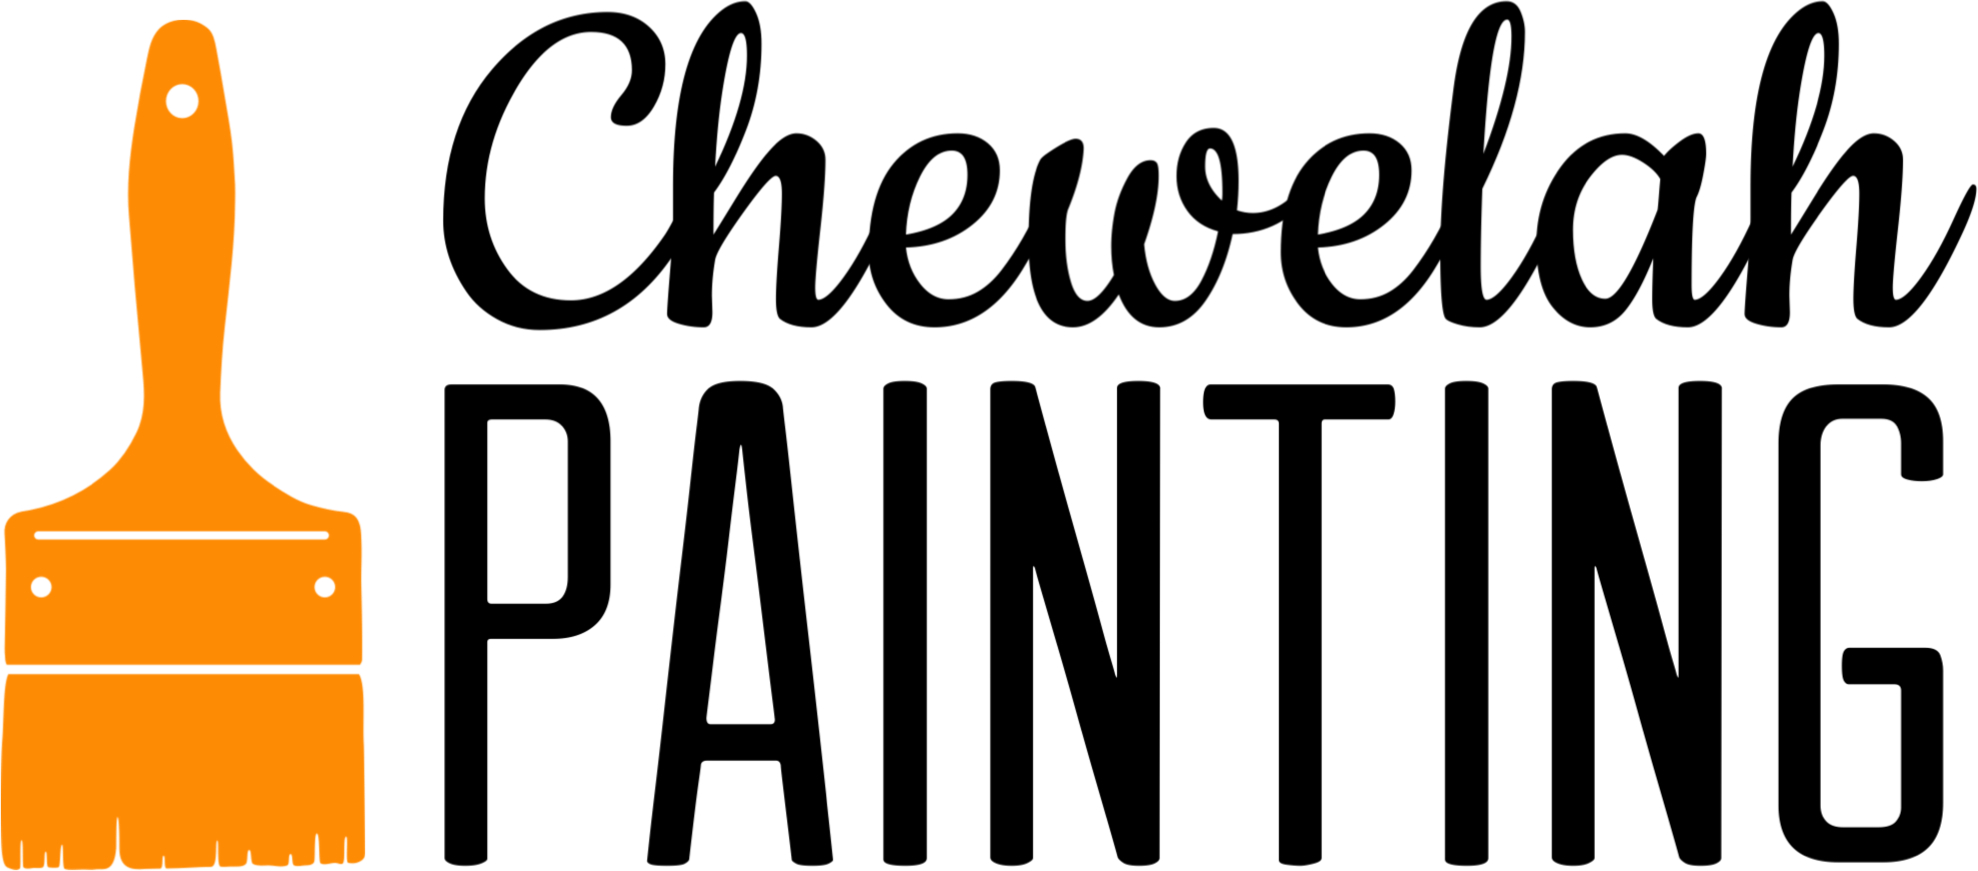 Chewelah Painting, Top Painting Contractor in Spokane & Chewelah Washington